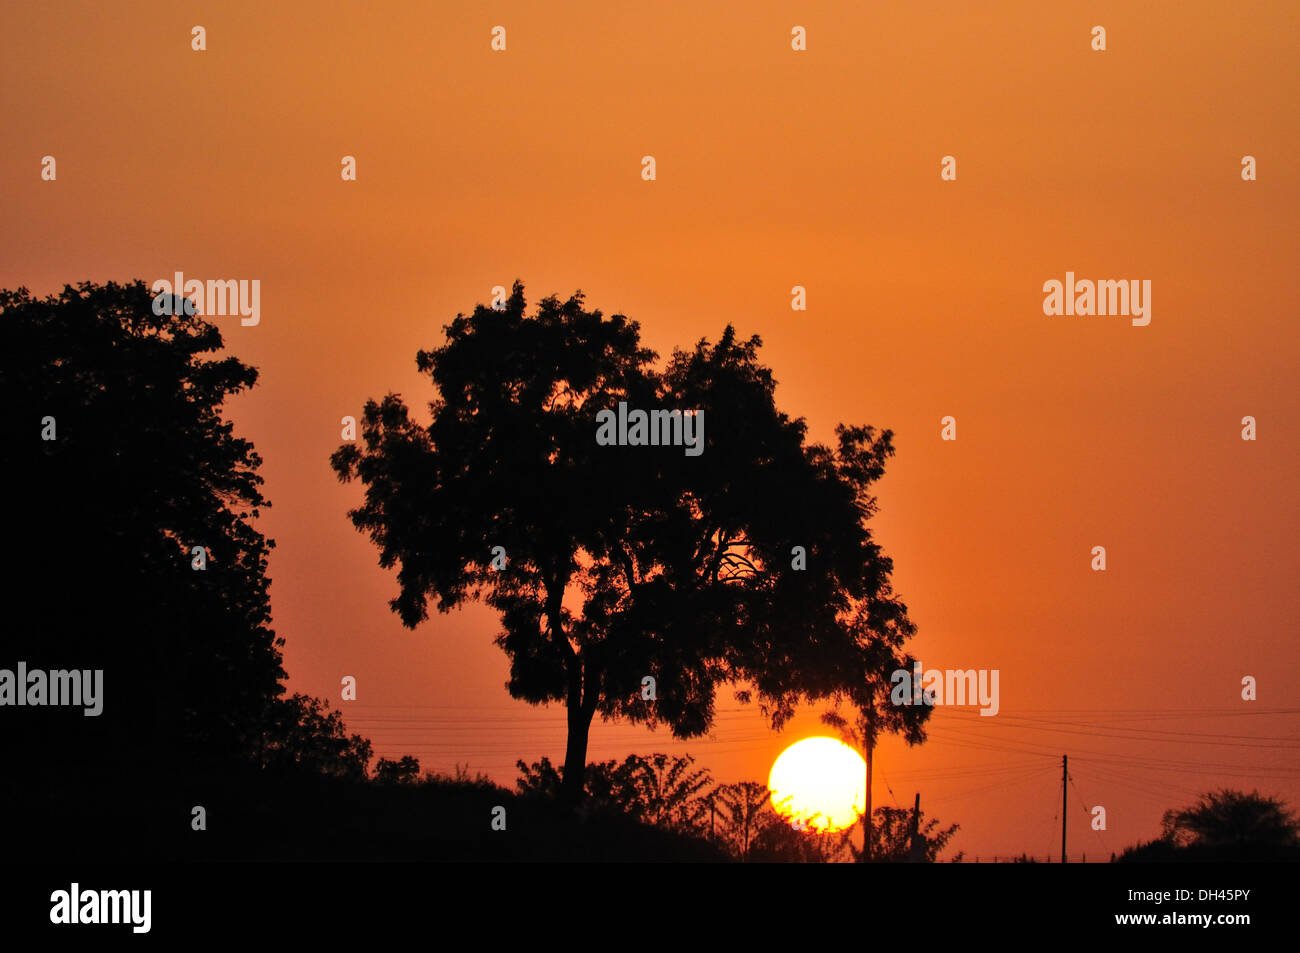 Sonnenuntergang hinter Baum, orange Himmel, Silhouette, indien, asien Stockfoto